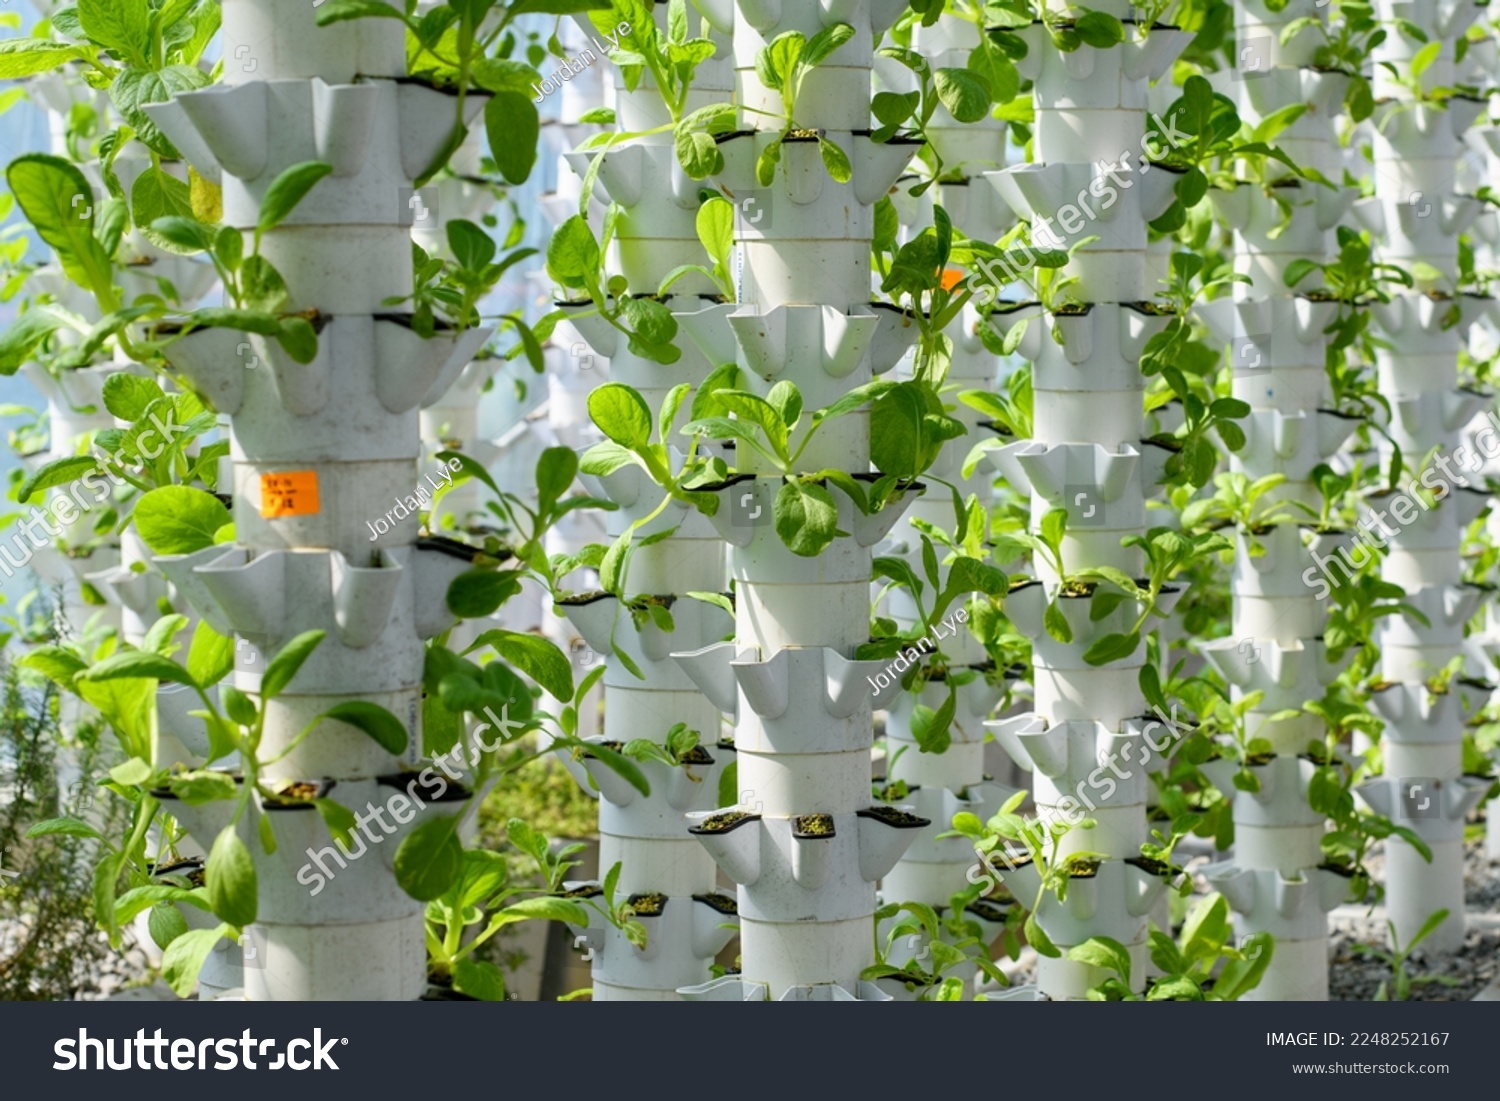 Vertical vegetable farming inside a green house #2248252167